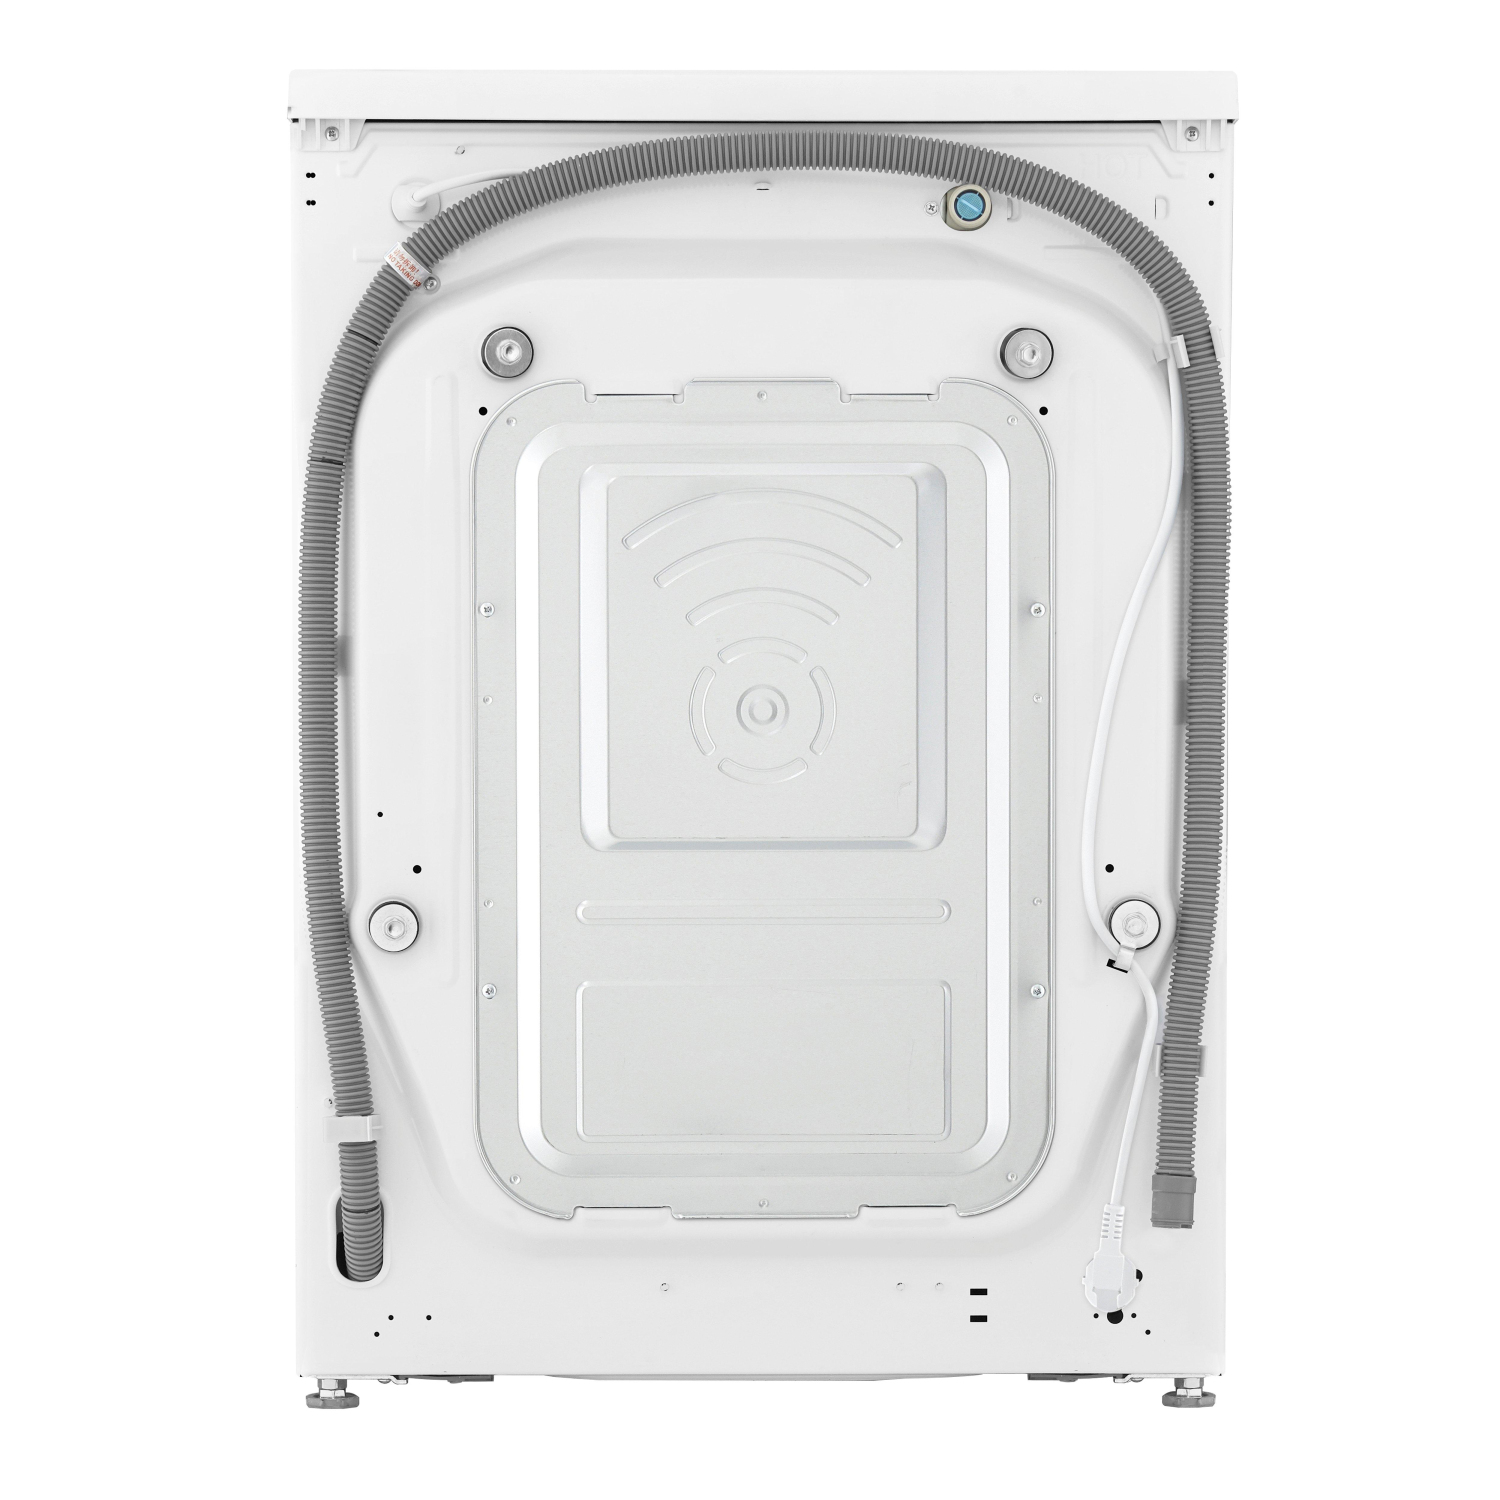 LG F2Y509WBLN1 9kg 1200 Spin Washing Machine - White - 7